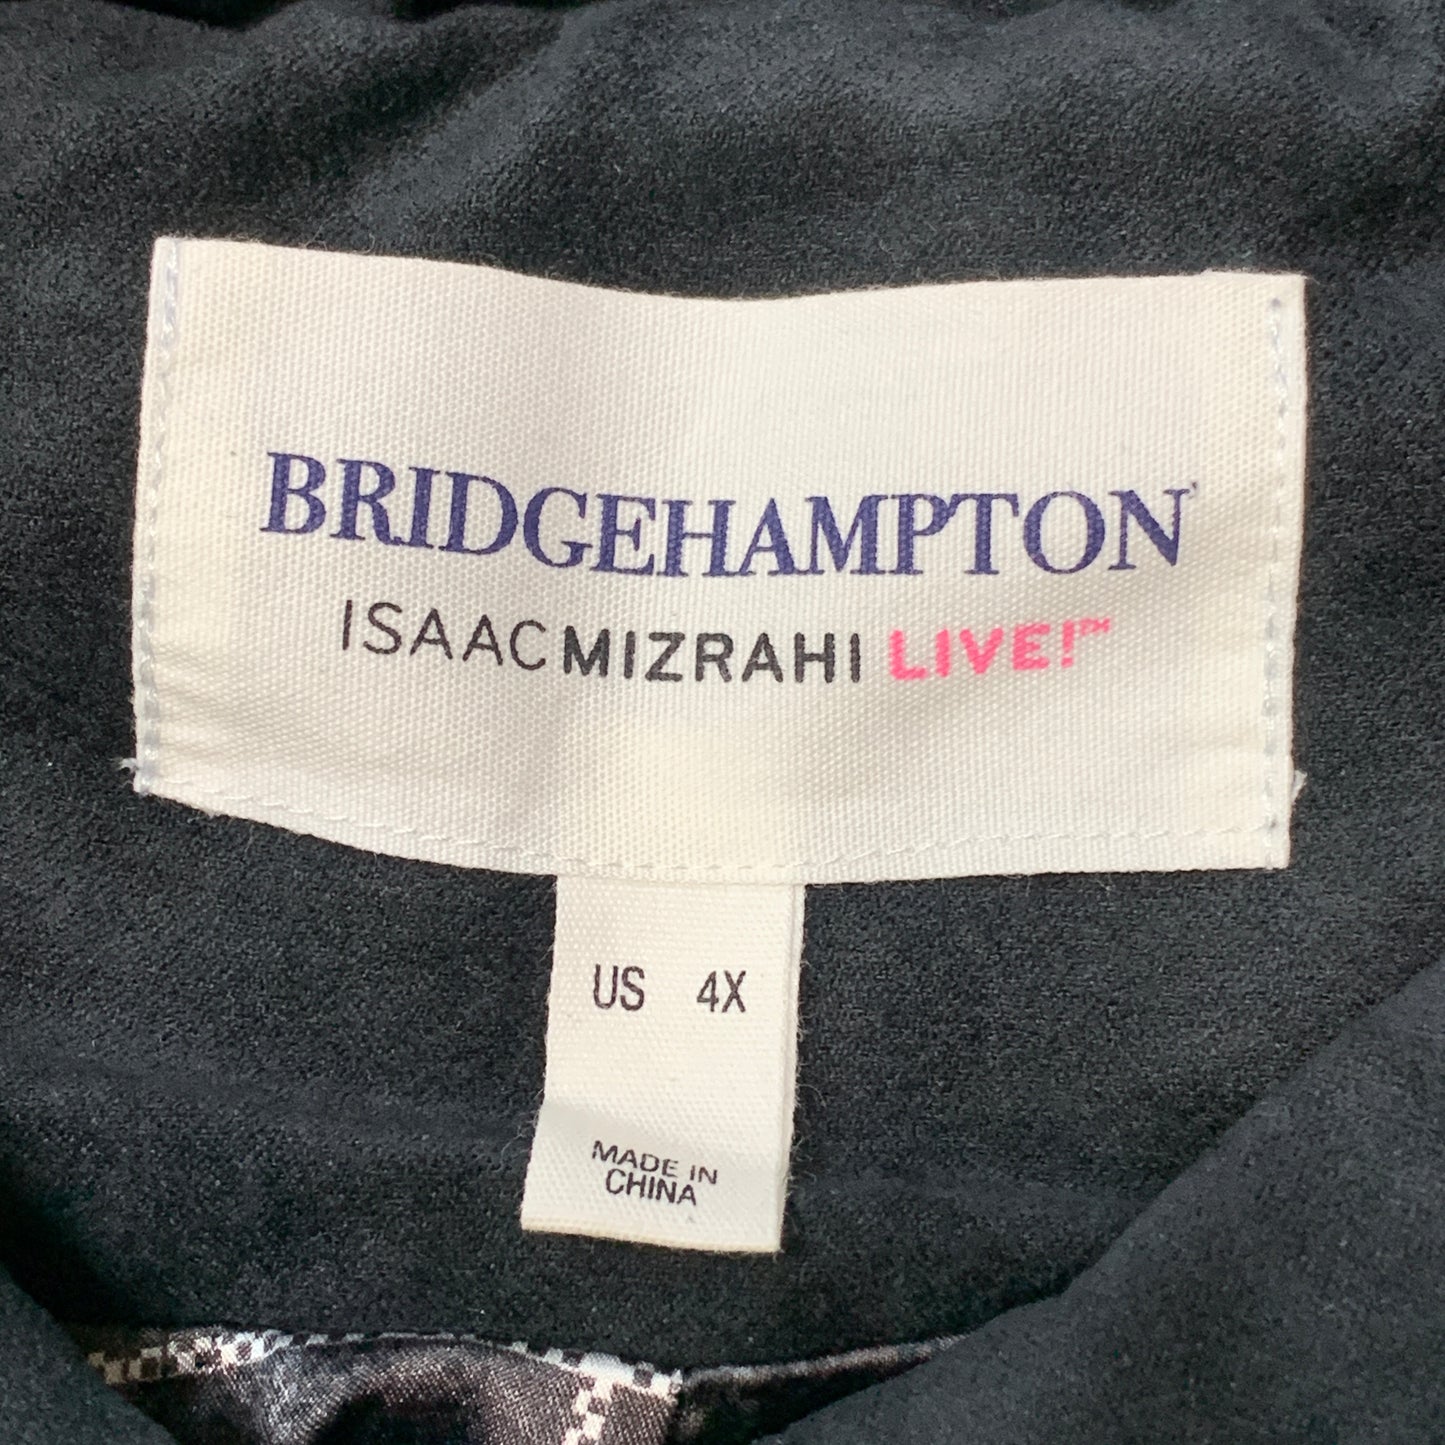 BRIDGE HAMPTON ISSAC MIZRAHI LIVE! Faux Suede Coat Full Snap Up Black Size 4X